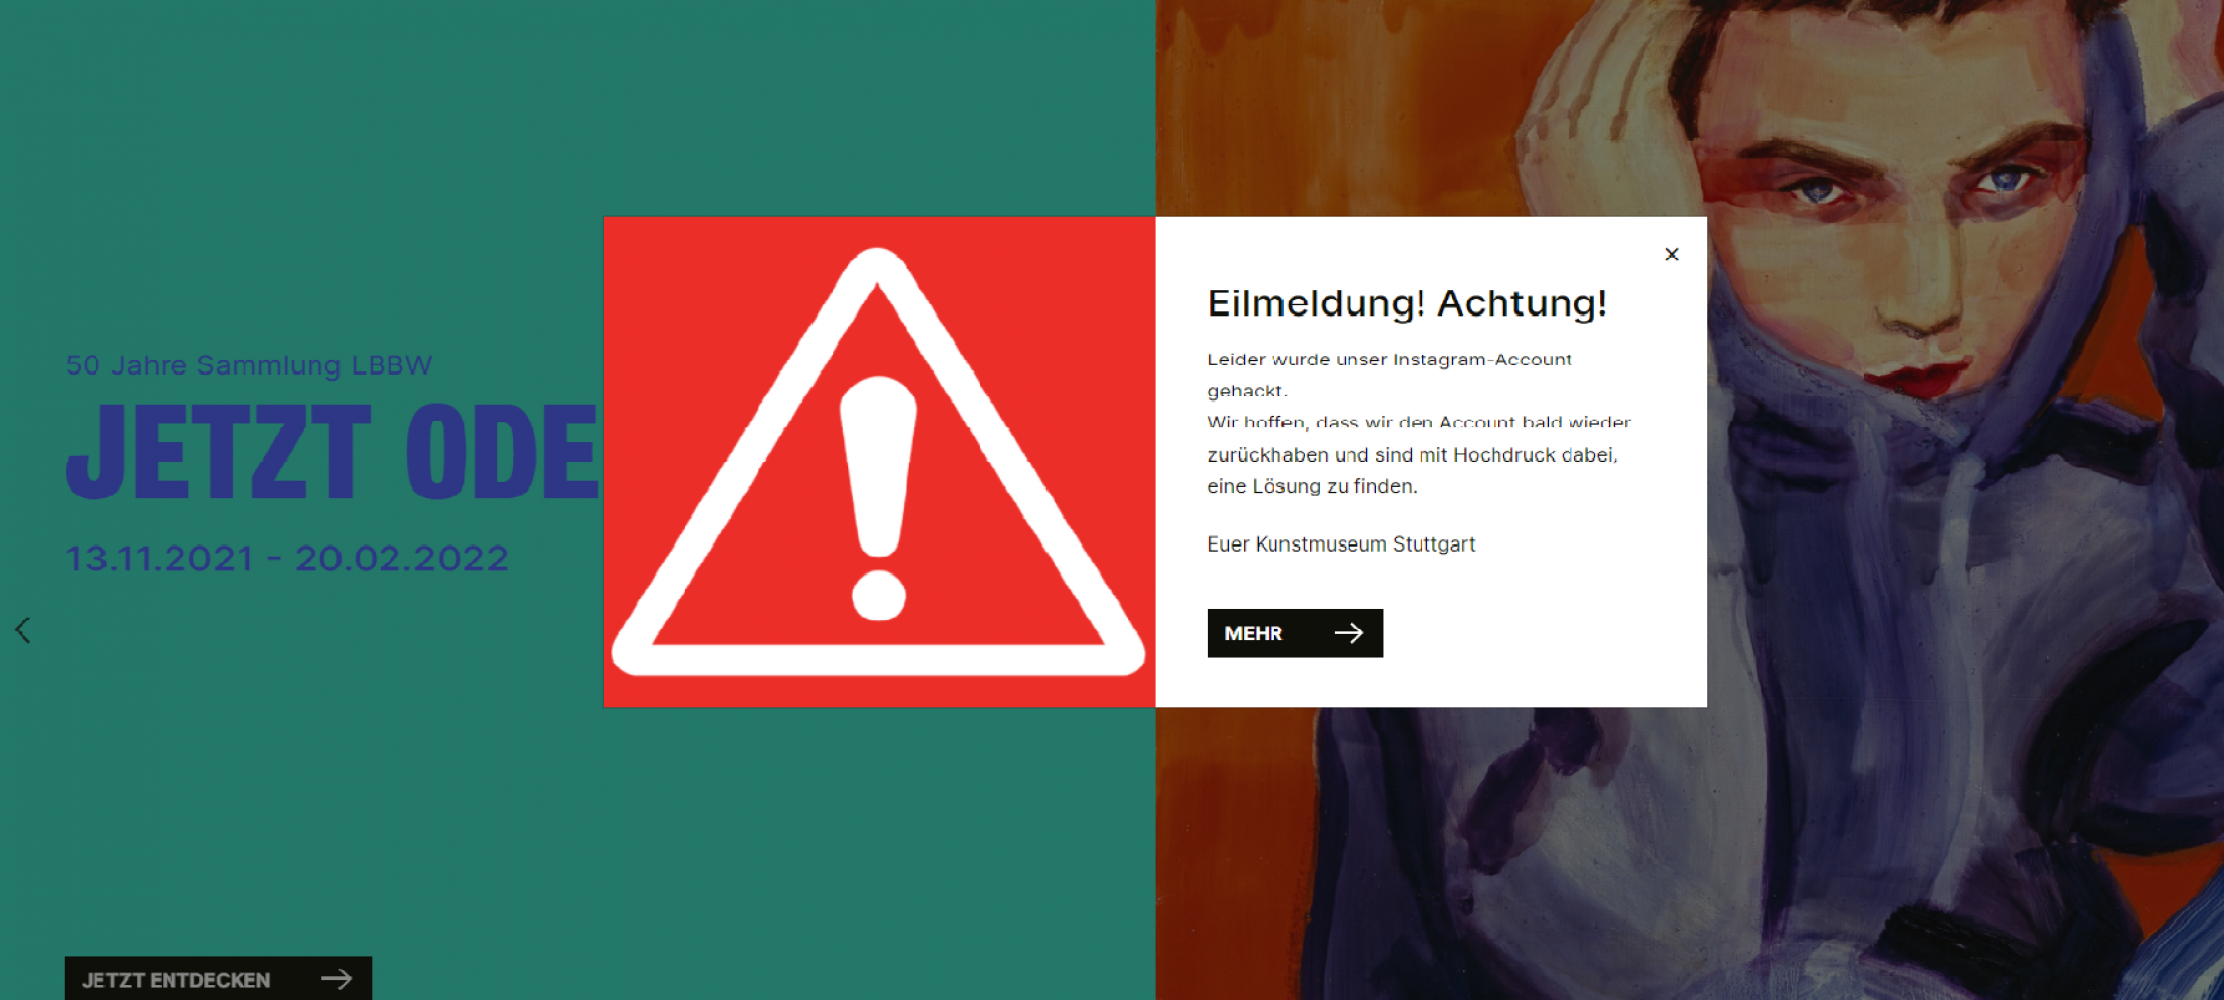 Warnhinweis vor gehacktem Instagram-Account auf der Website des Kunstmuseums Stuttgart